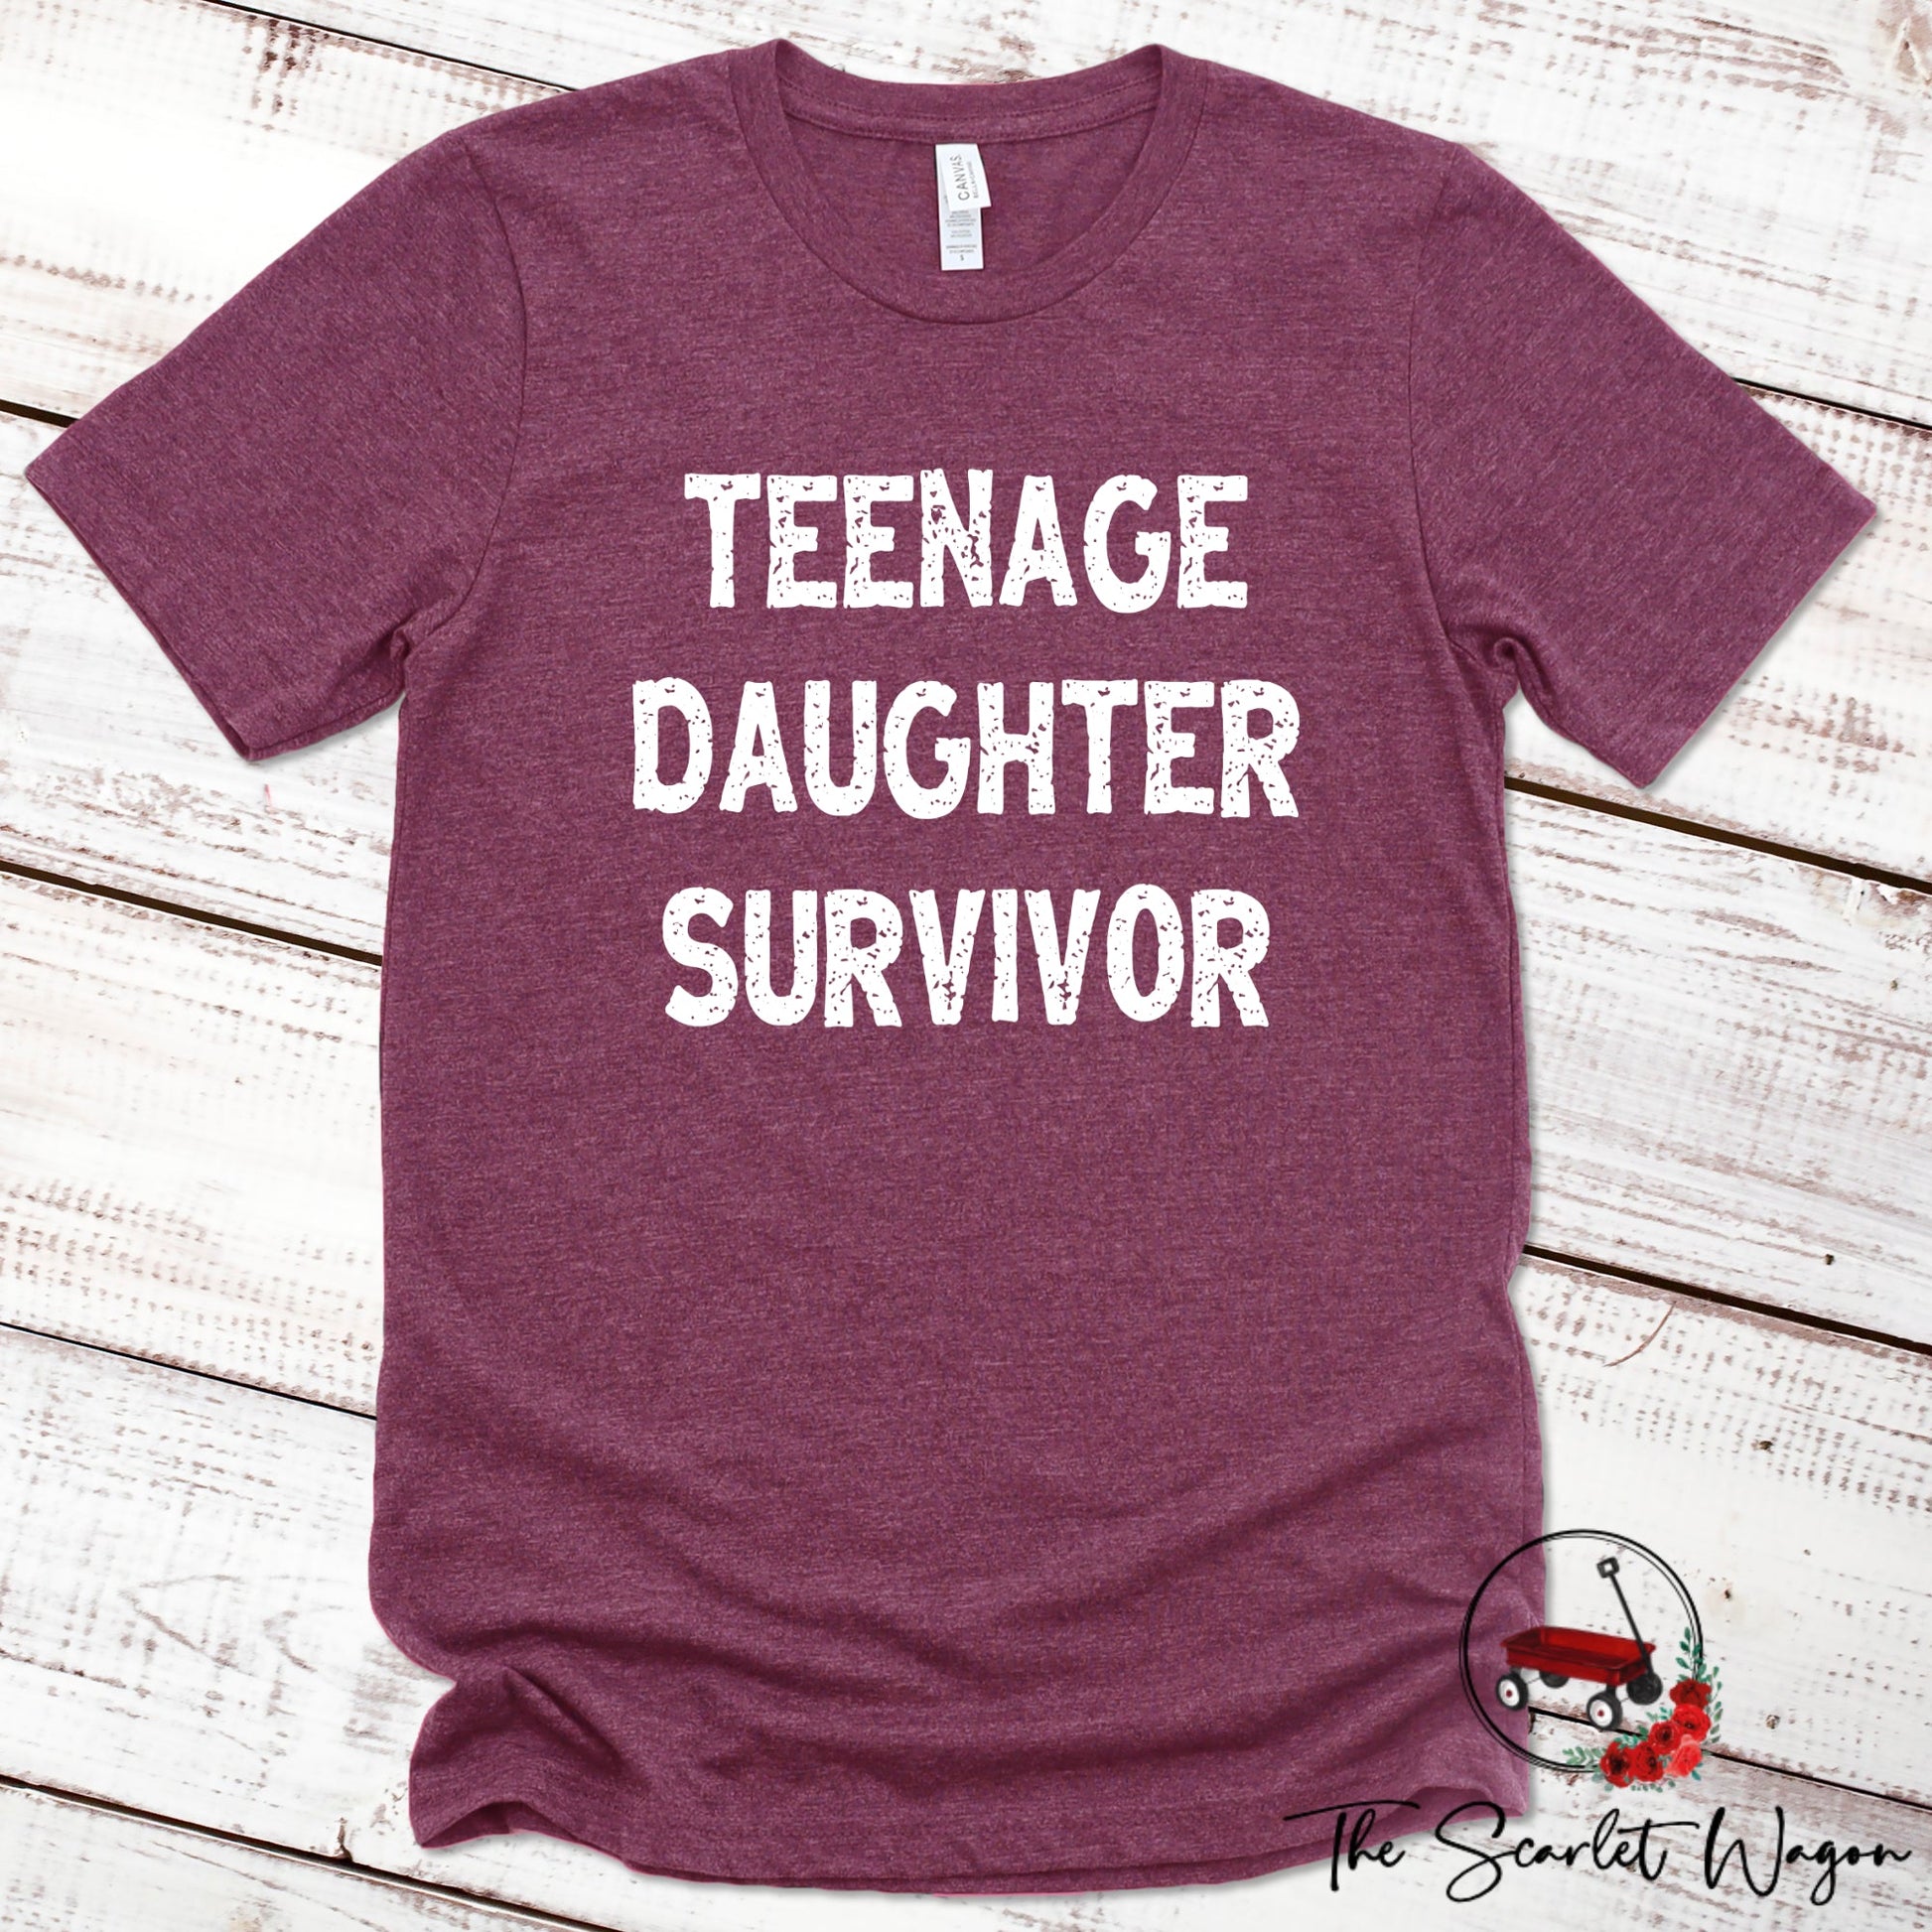 Teenage Daughter Survivor Premium Tee Scarlet Wagon Heather Maroon XS 